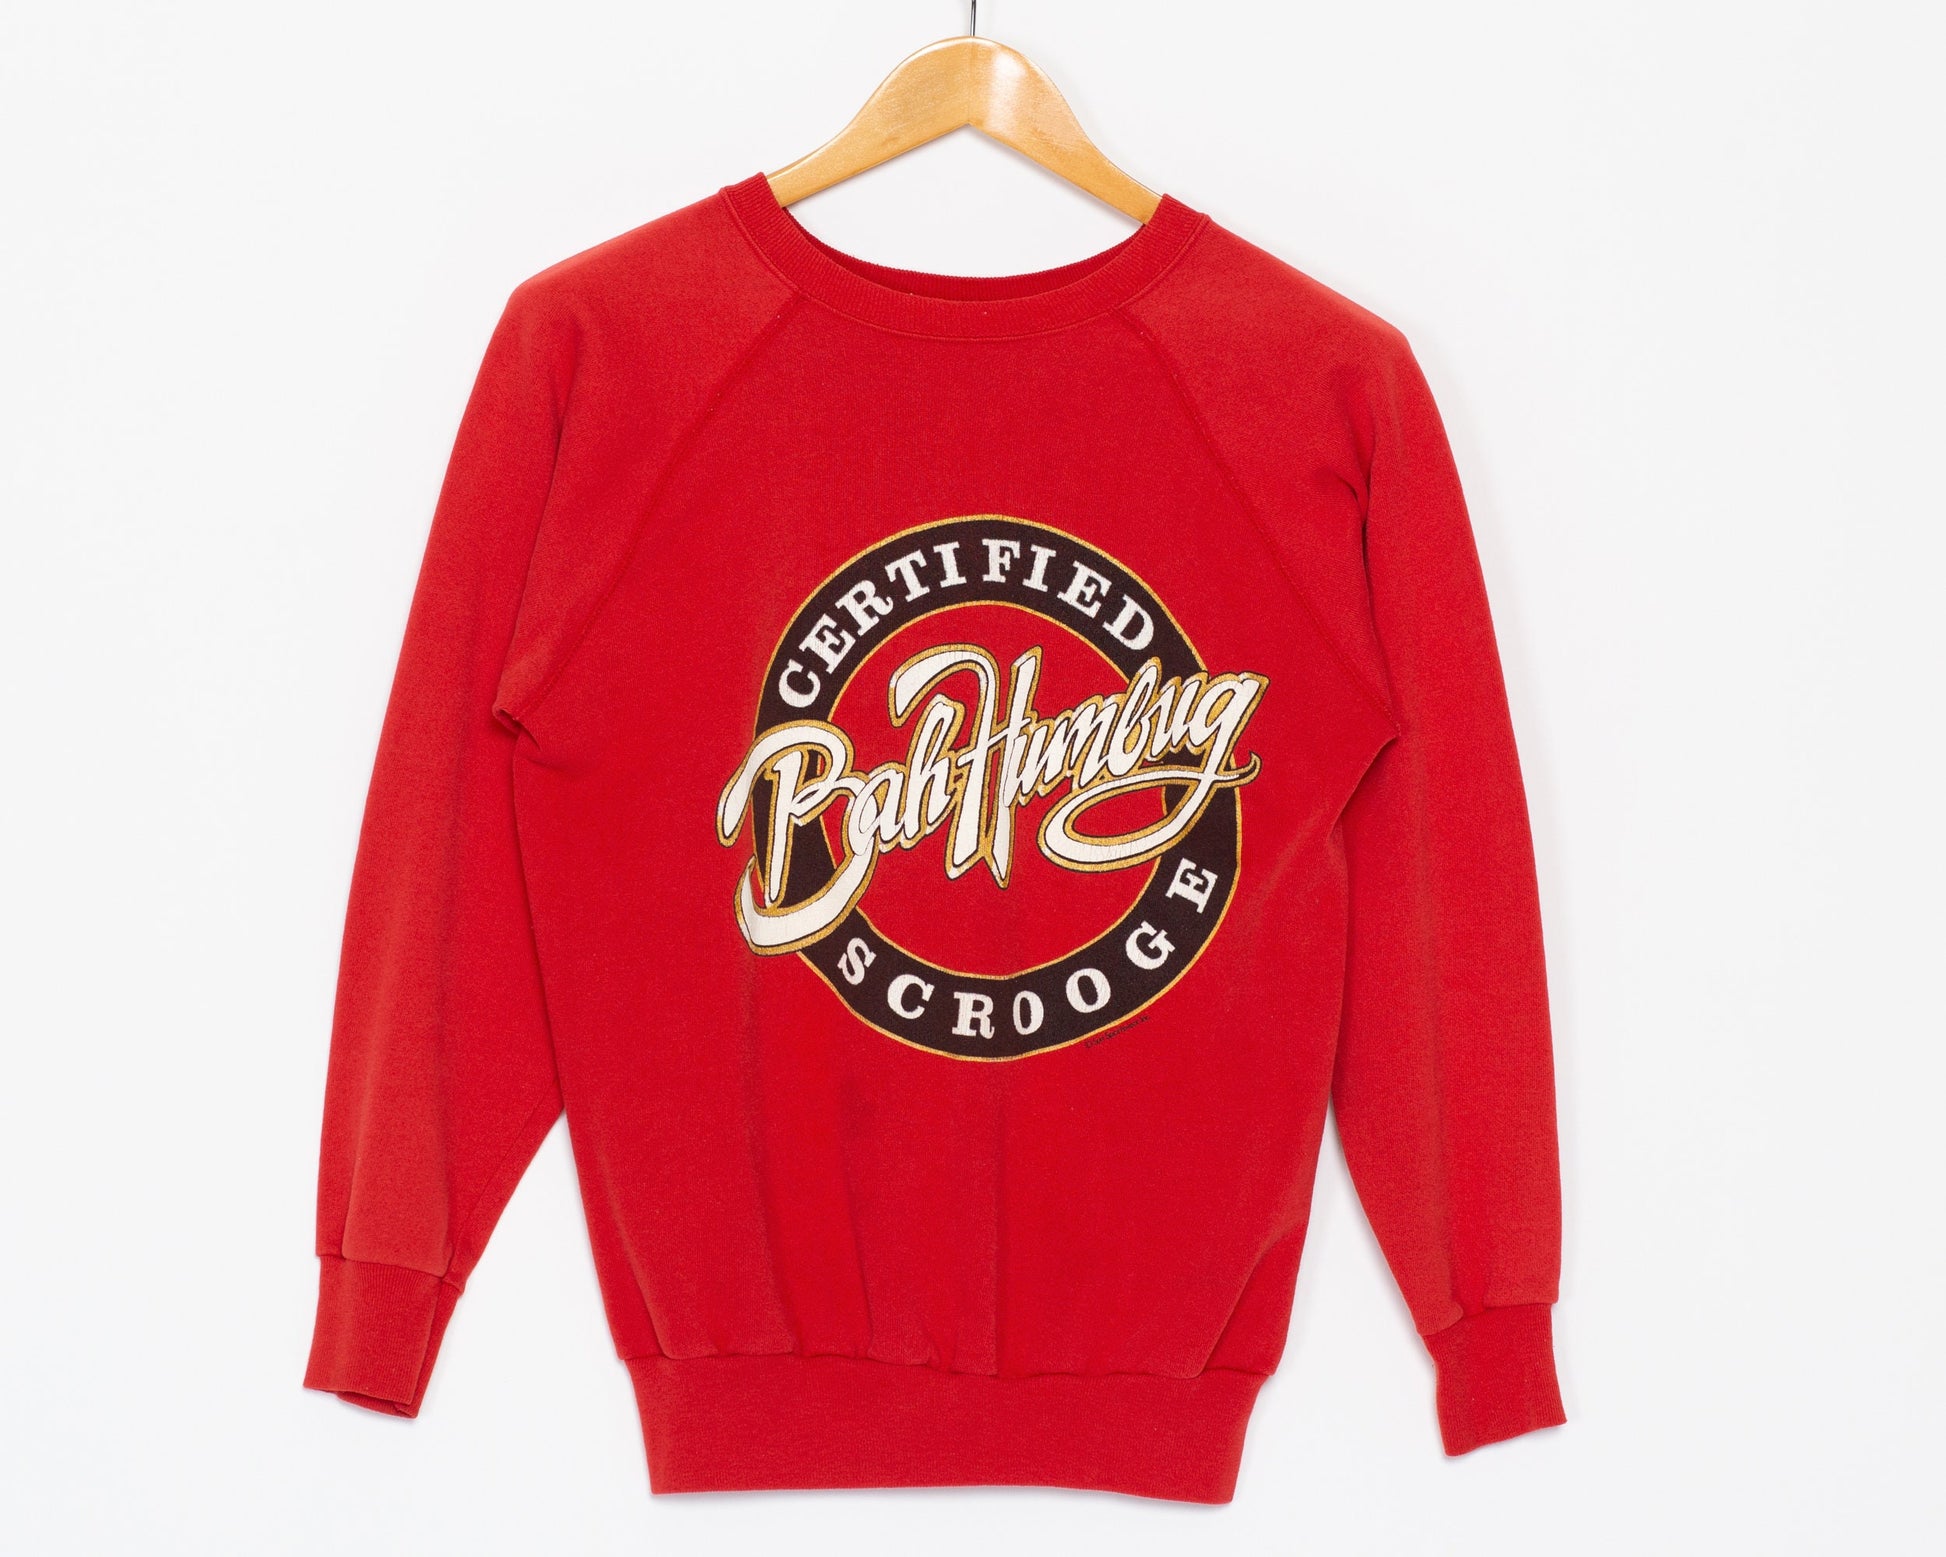 M-L| 80s "Bah Humbug" Certified Scrooge Sweatshirt - Men's Medium Short, Women's Large | Vintage Red Raglan Christmas Carol Graphic Crewneck